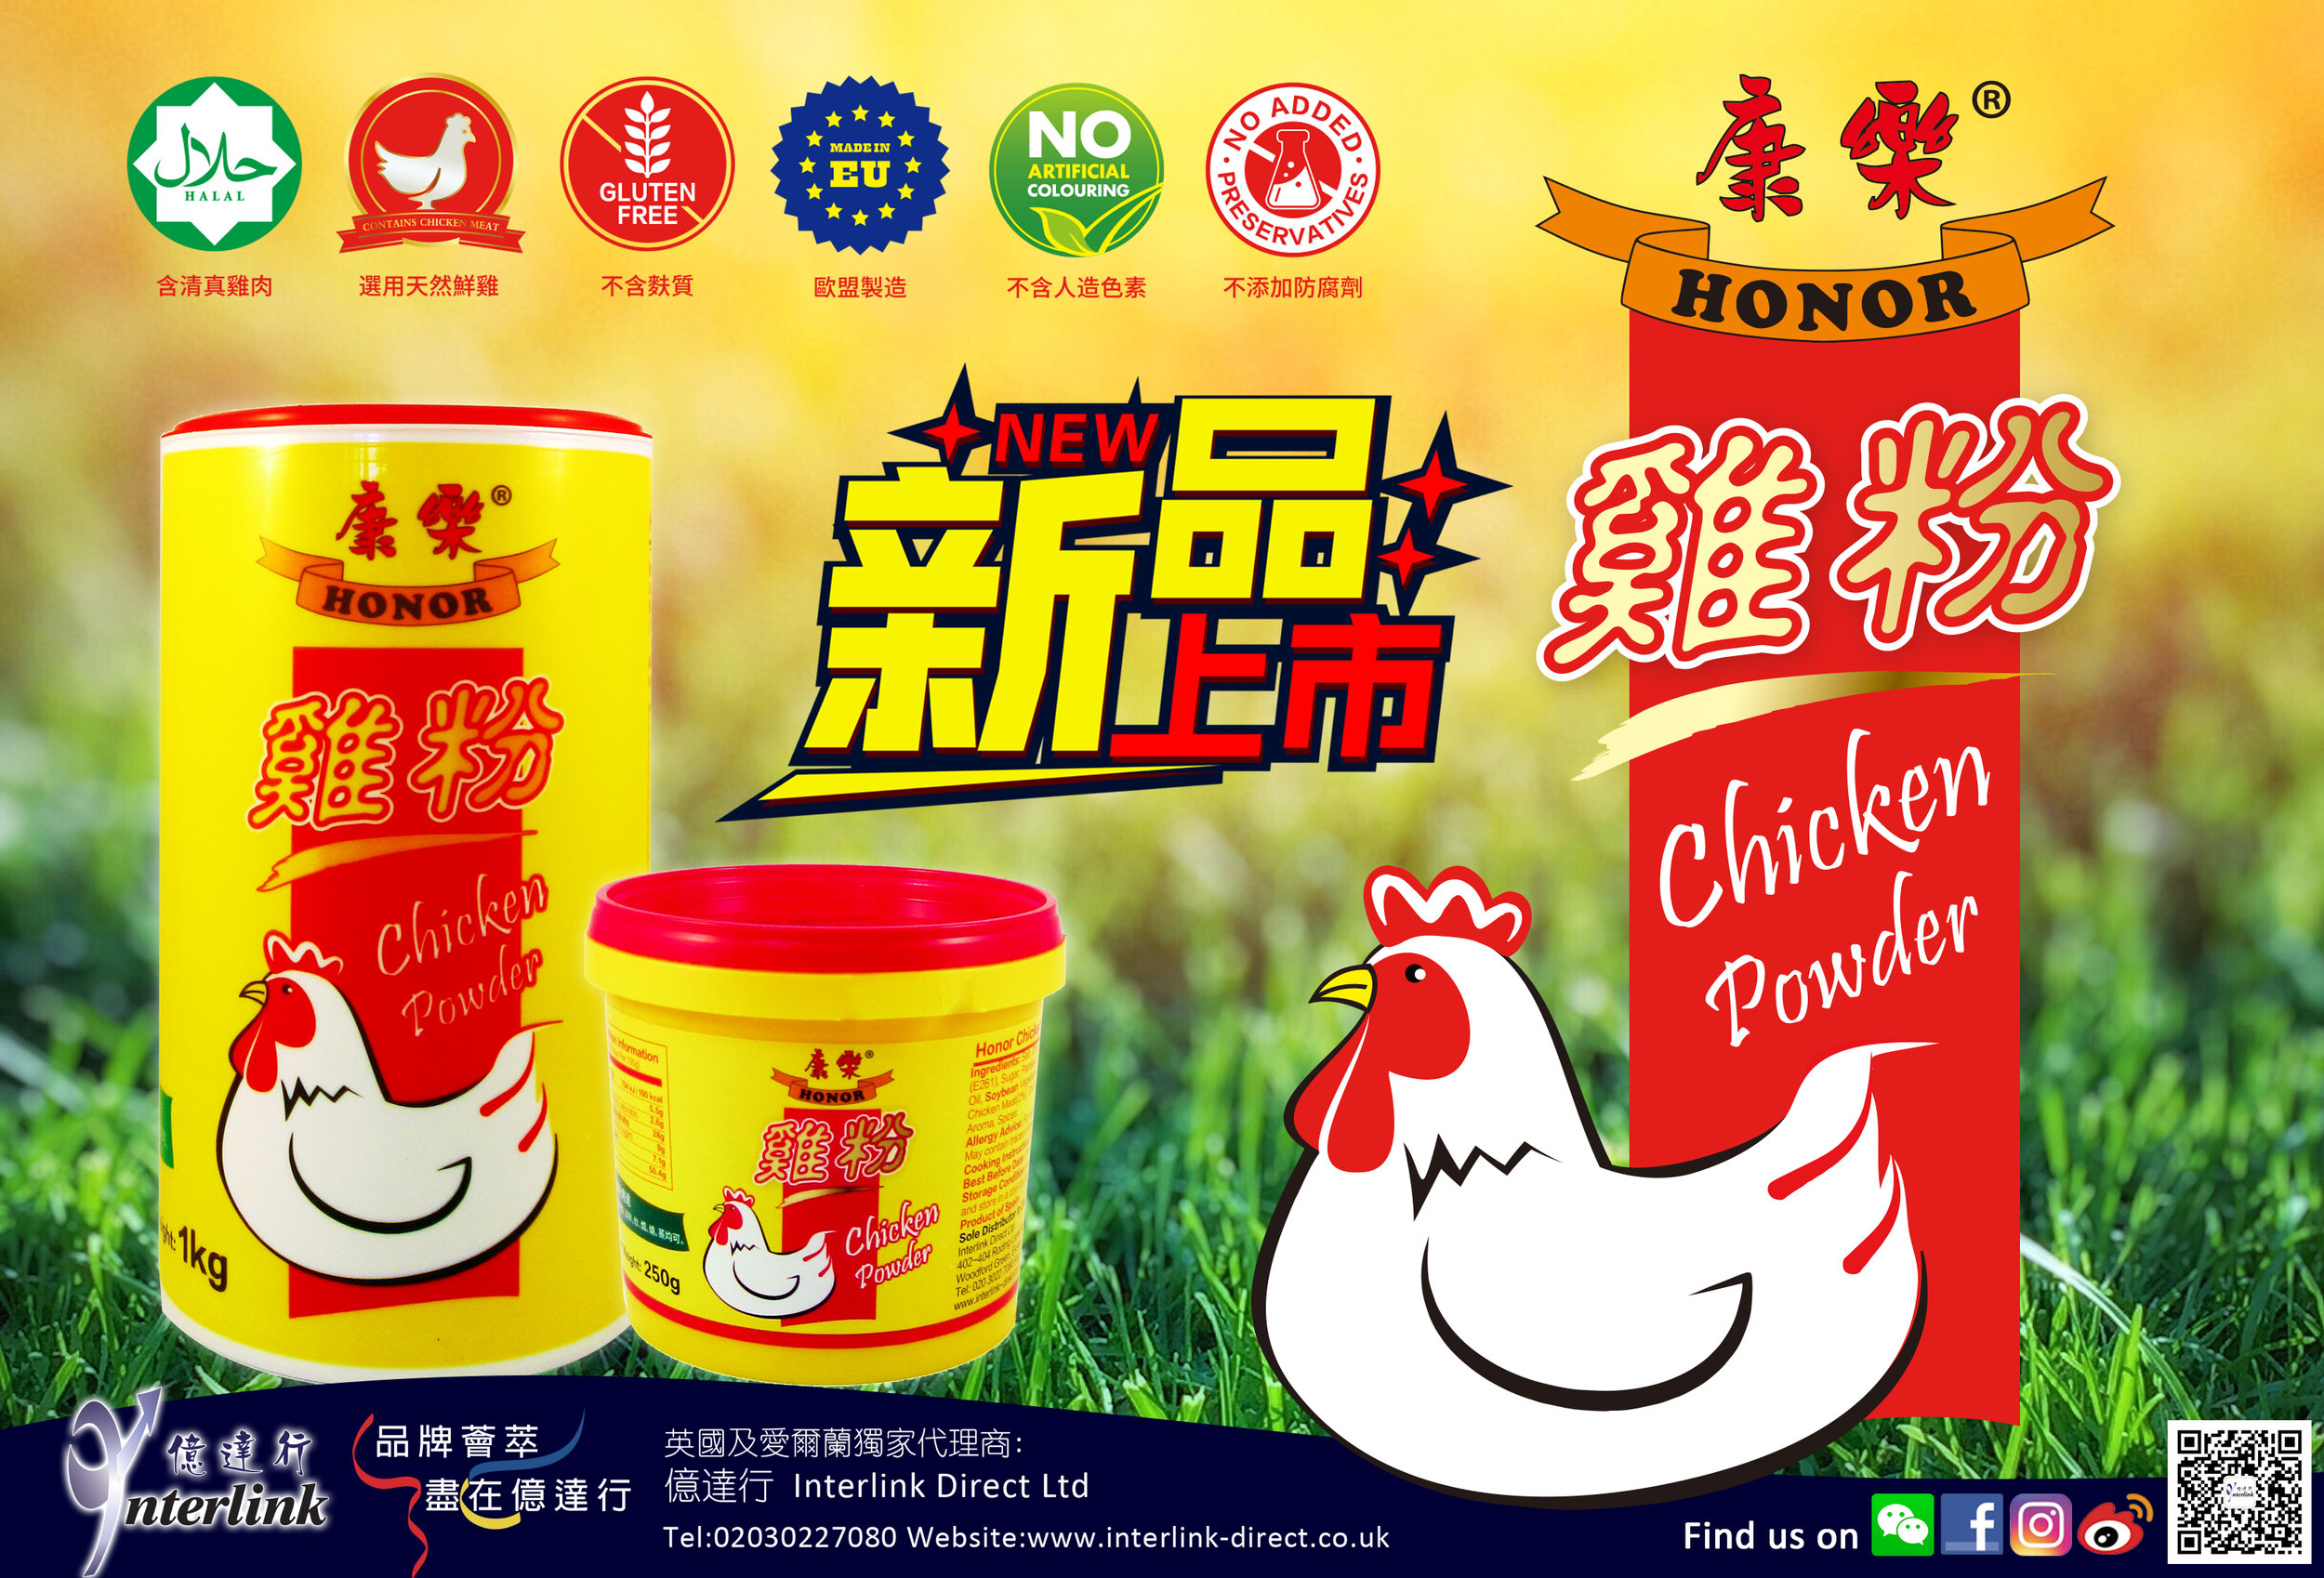 Newspaper Advert - Honor Chicken Powder.jpg